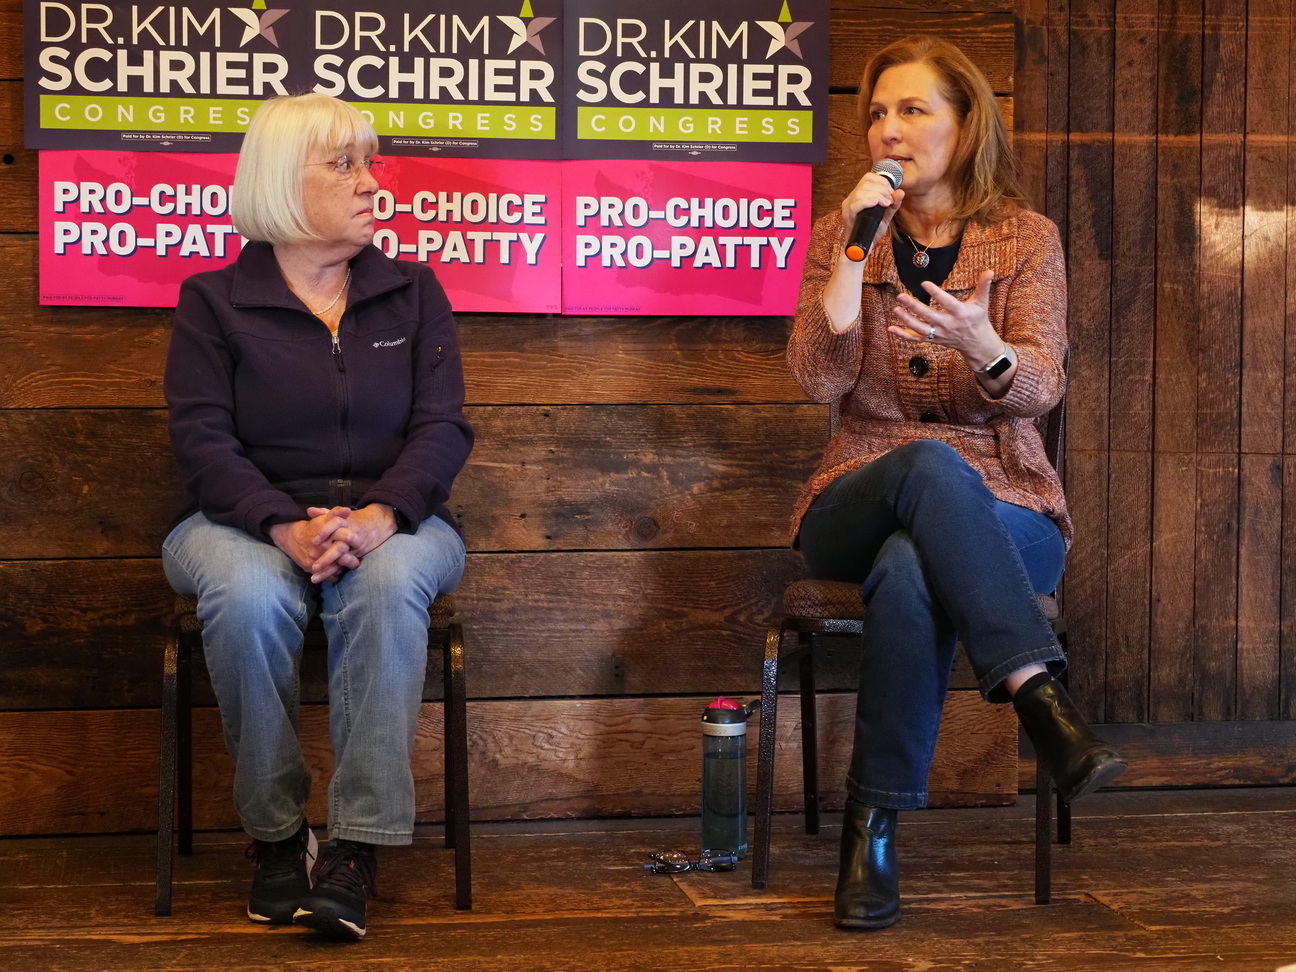 U.S. Senator Patty Murray and U.S. Representative Kim Schrier discuss reproductive rights